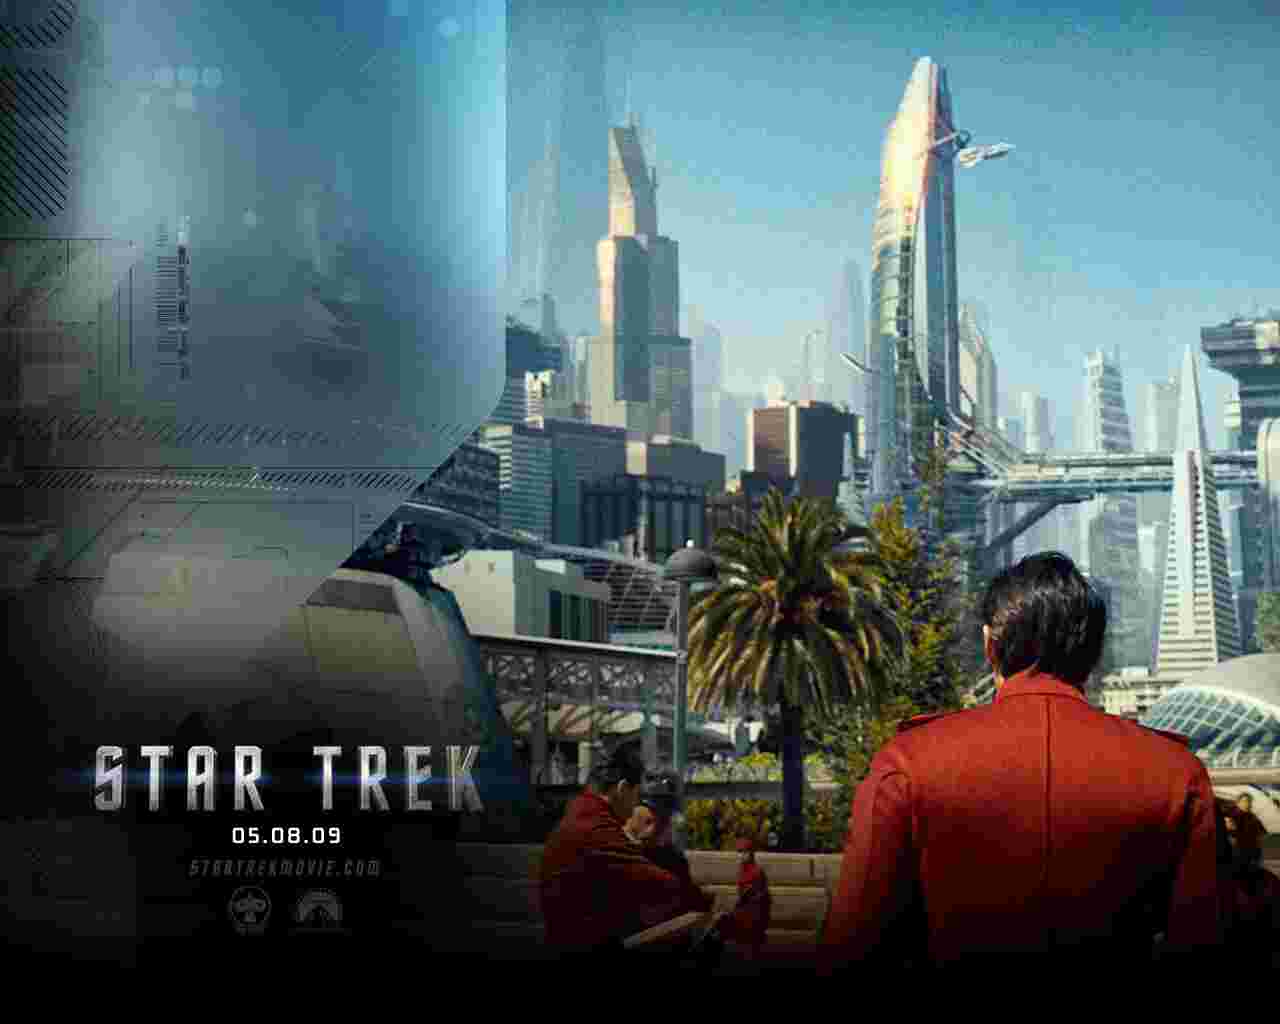 Star Trek Wallpaper Movies Collection